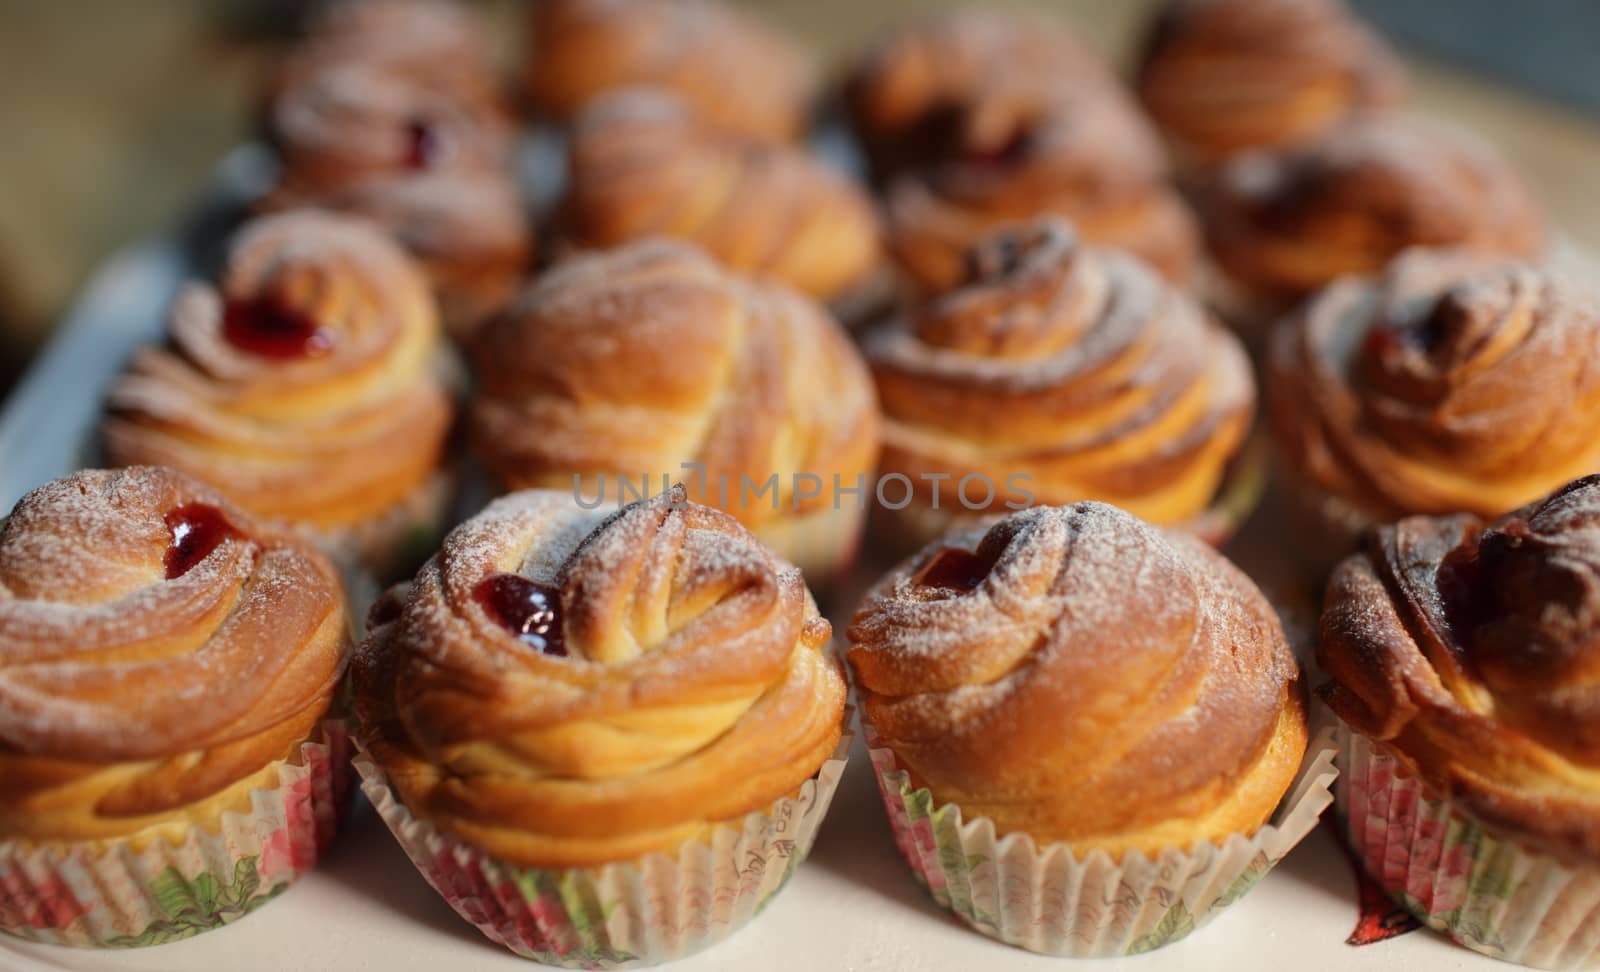 Muffins fresh pastry on baking sheet by mrivserg